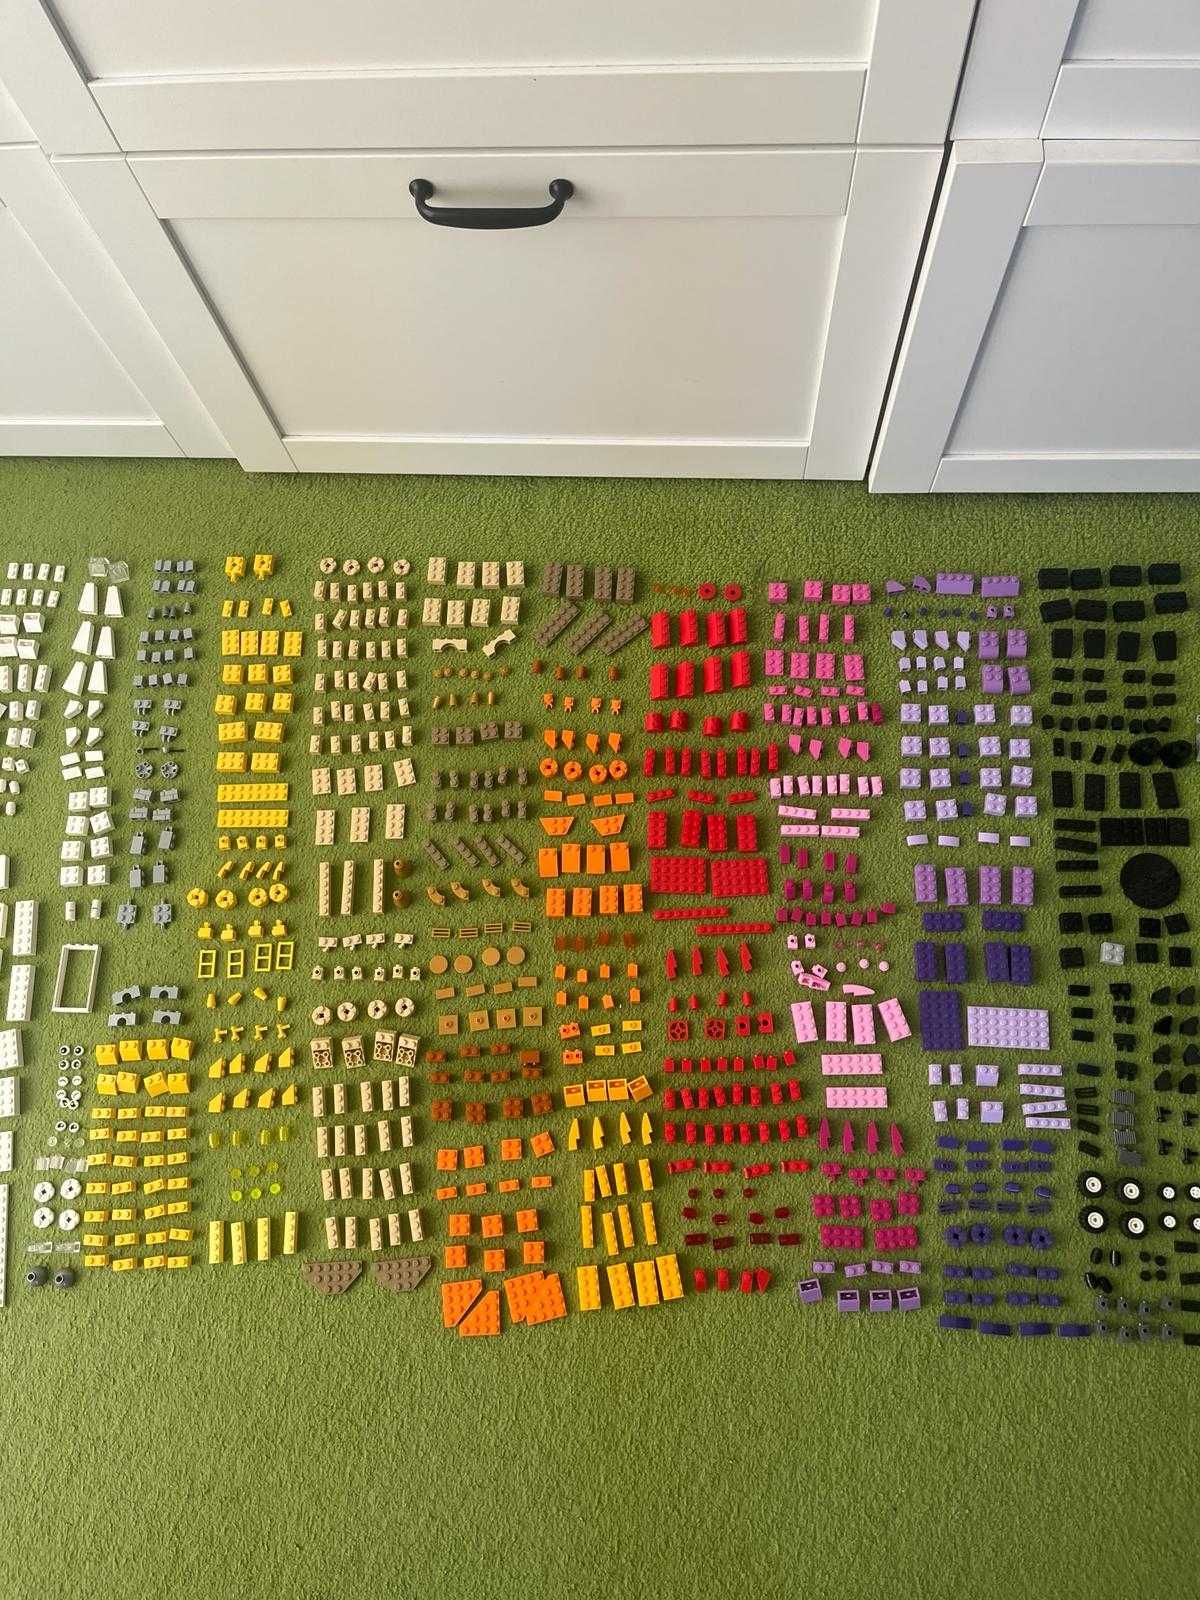 LEGO CLASSIC 10717,  1500 sztuk, 4-99